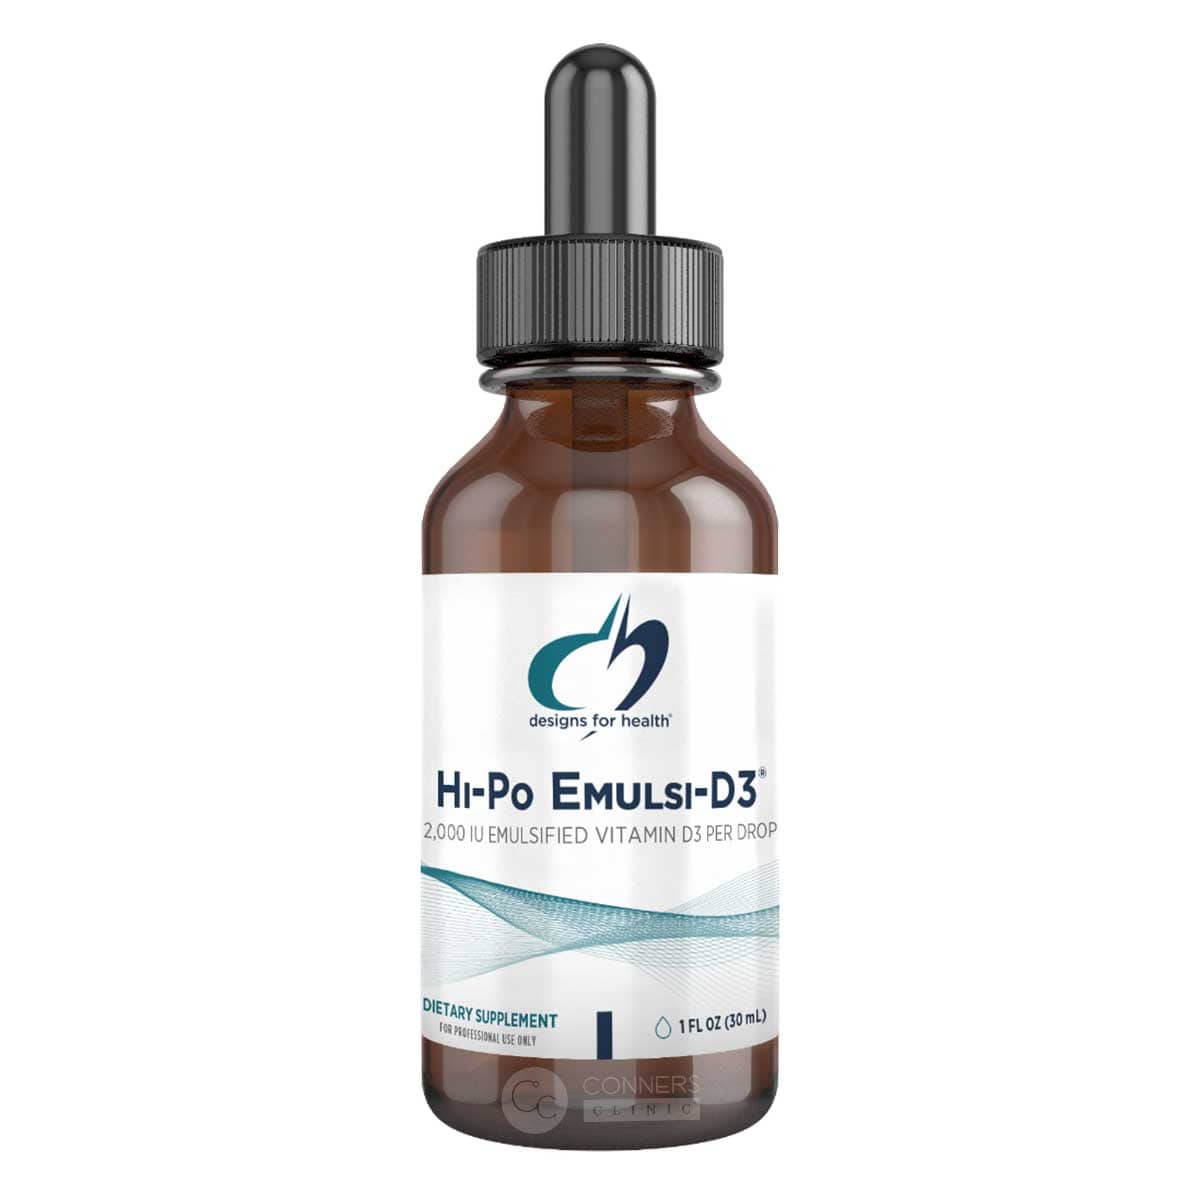 Hi-Po Emulsi-D3 - Vitamin D3 alone - 1 fl oz Designs for Health Supplement - Conners Clinic